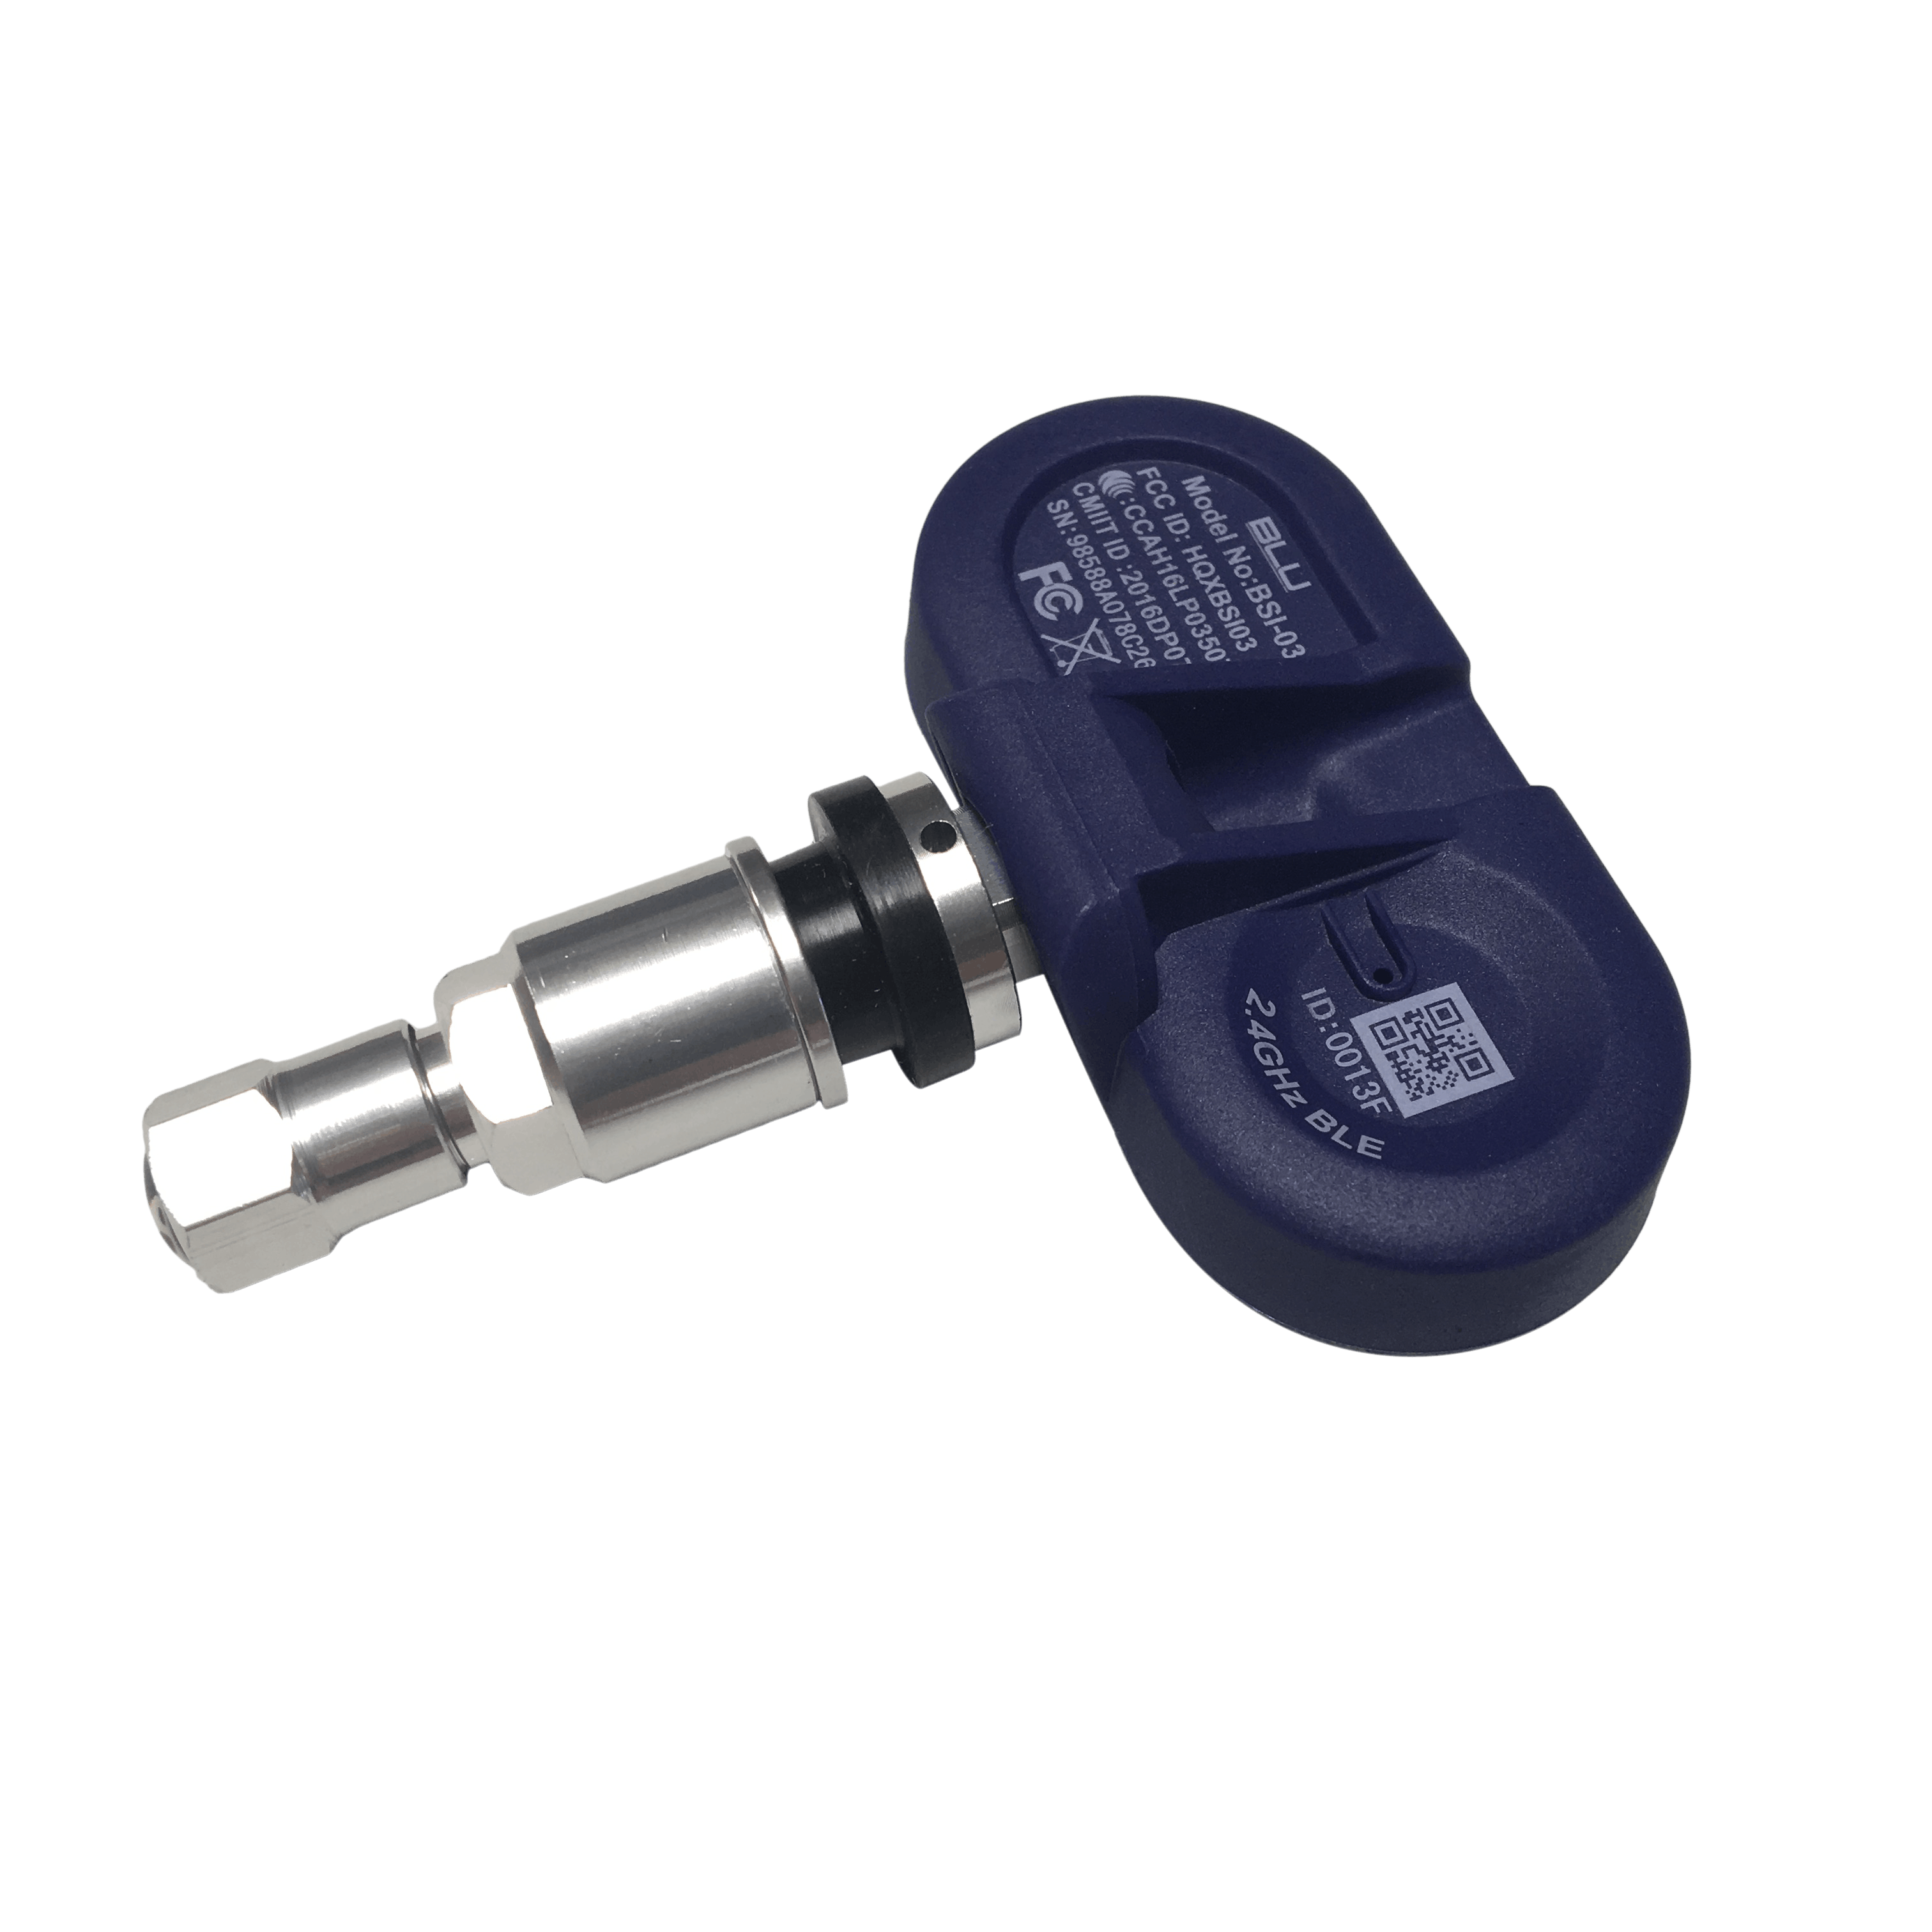 Trigger 602100 Tire Pressure Monitoring System Kit Bluetooth 2 pc Internal Set 100psi